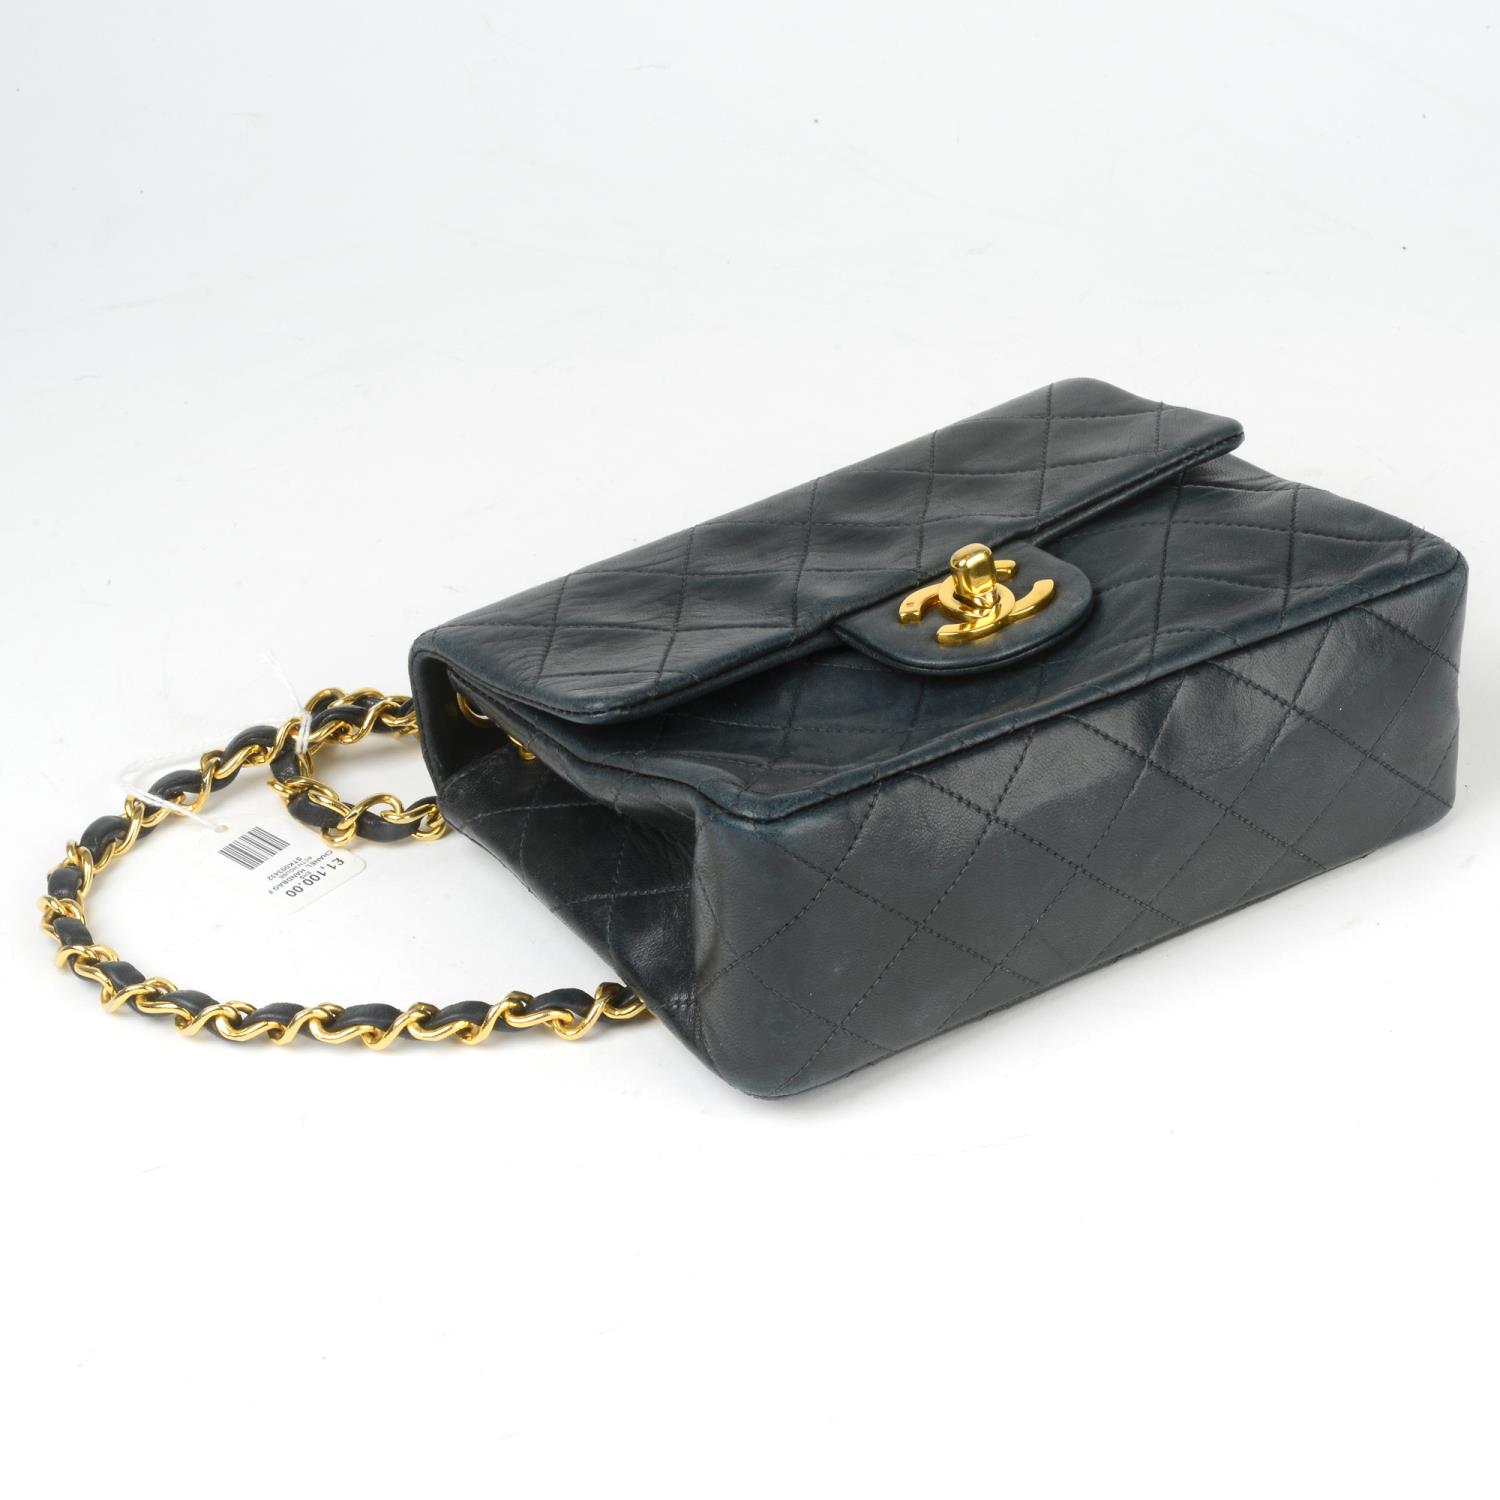 CHANEL - a Mini Square Classic Flap handbag. - Image 5 of 5